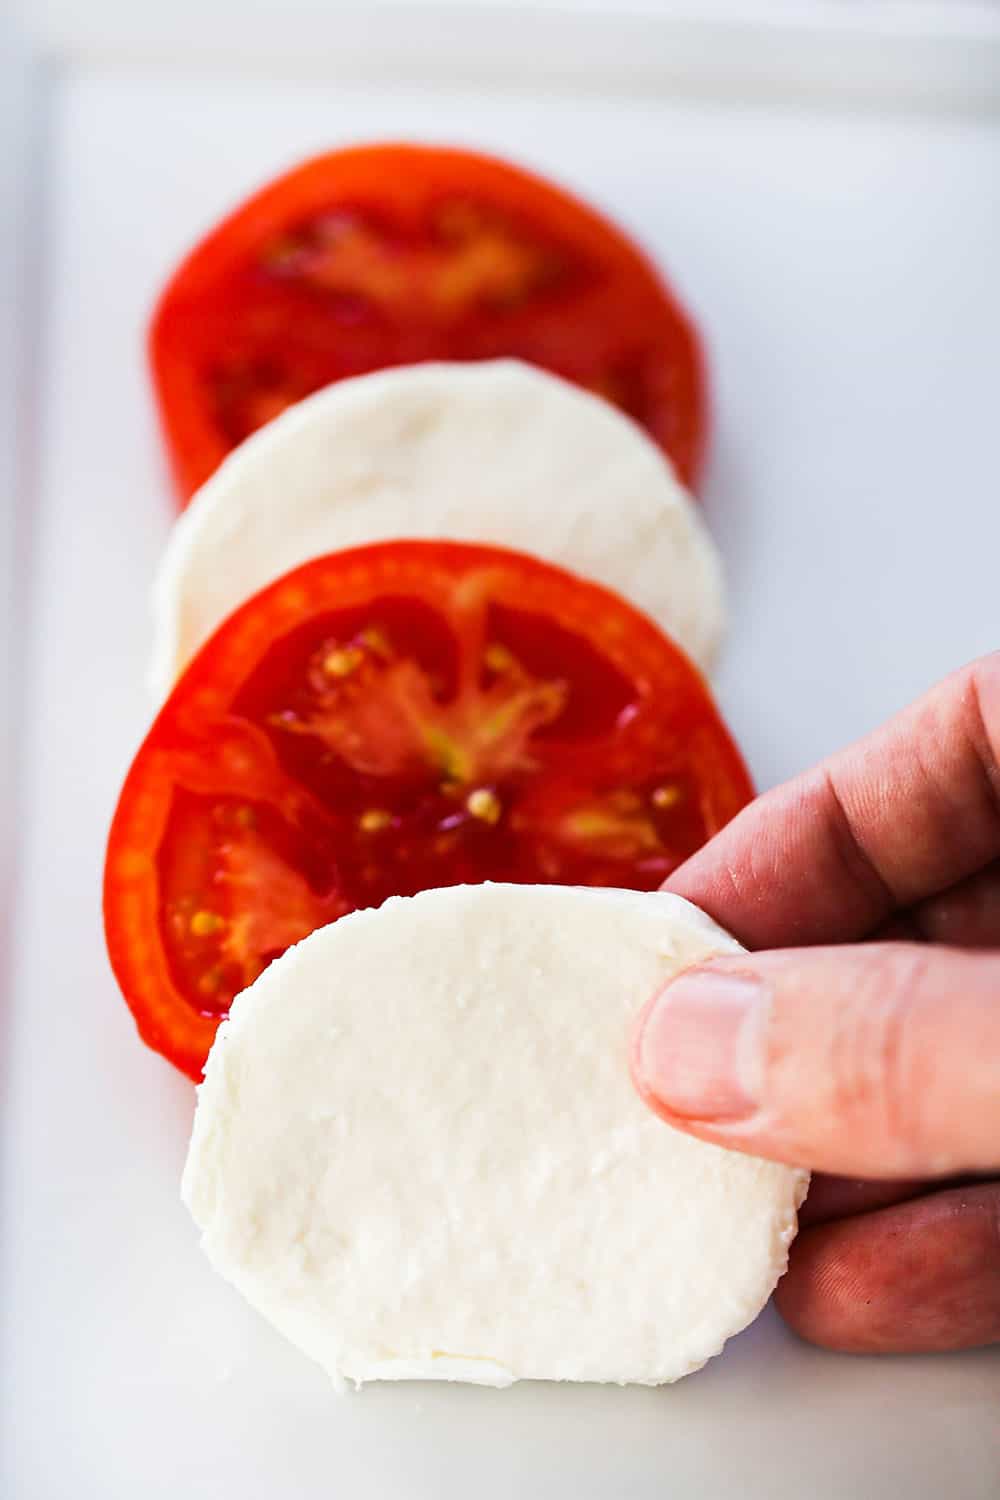 A person placing a circular slice of mozzarella cheese over a slice of tomato in front of two more layers of tomato and mozzarella.